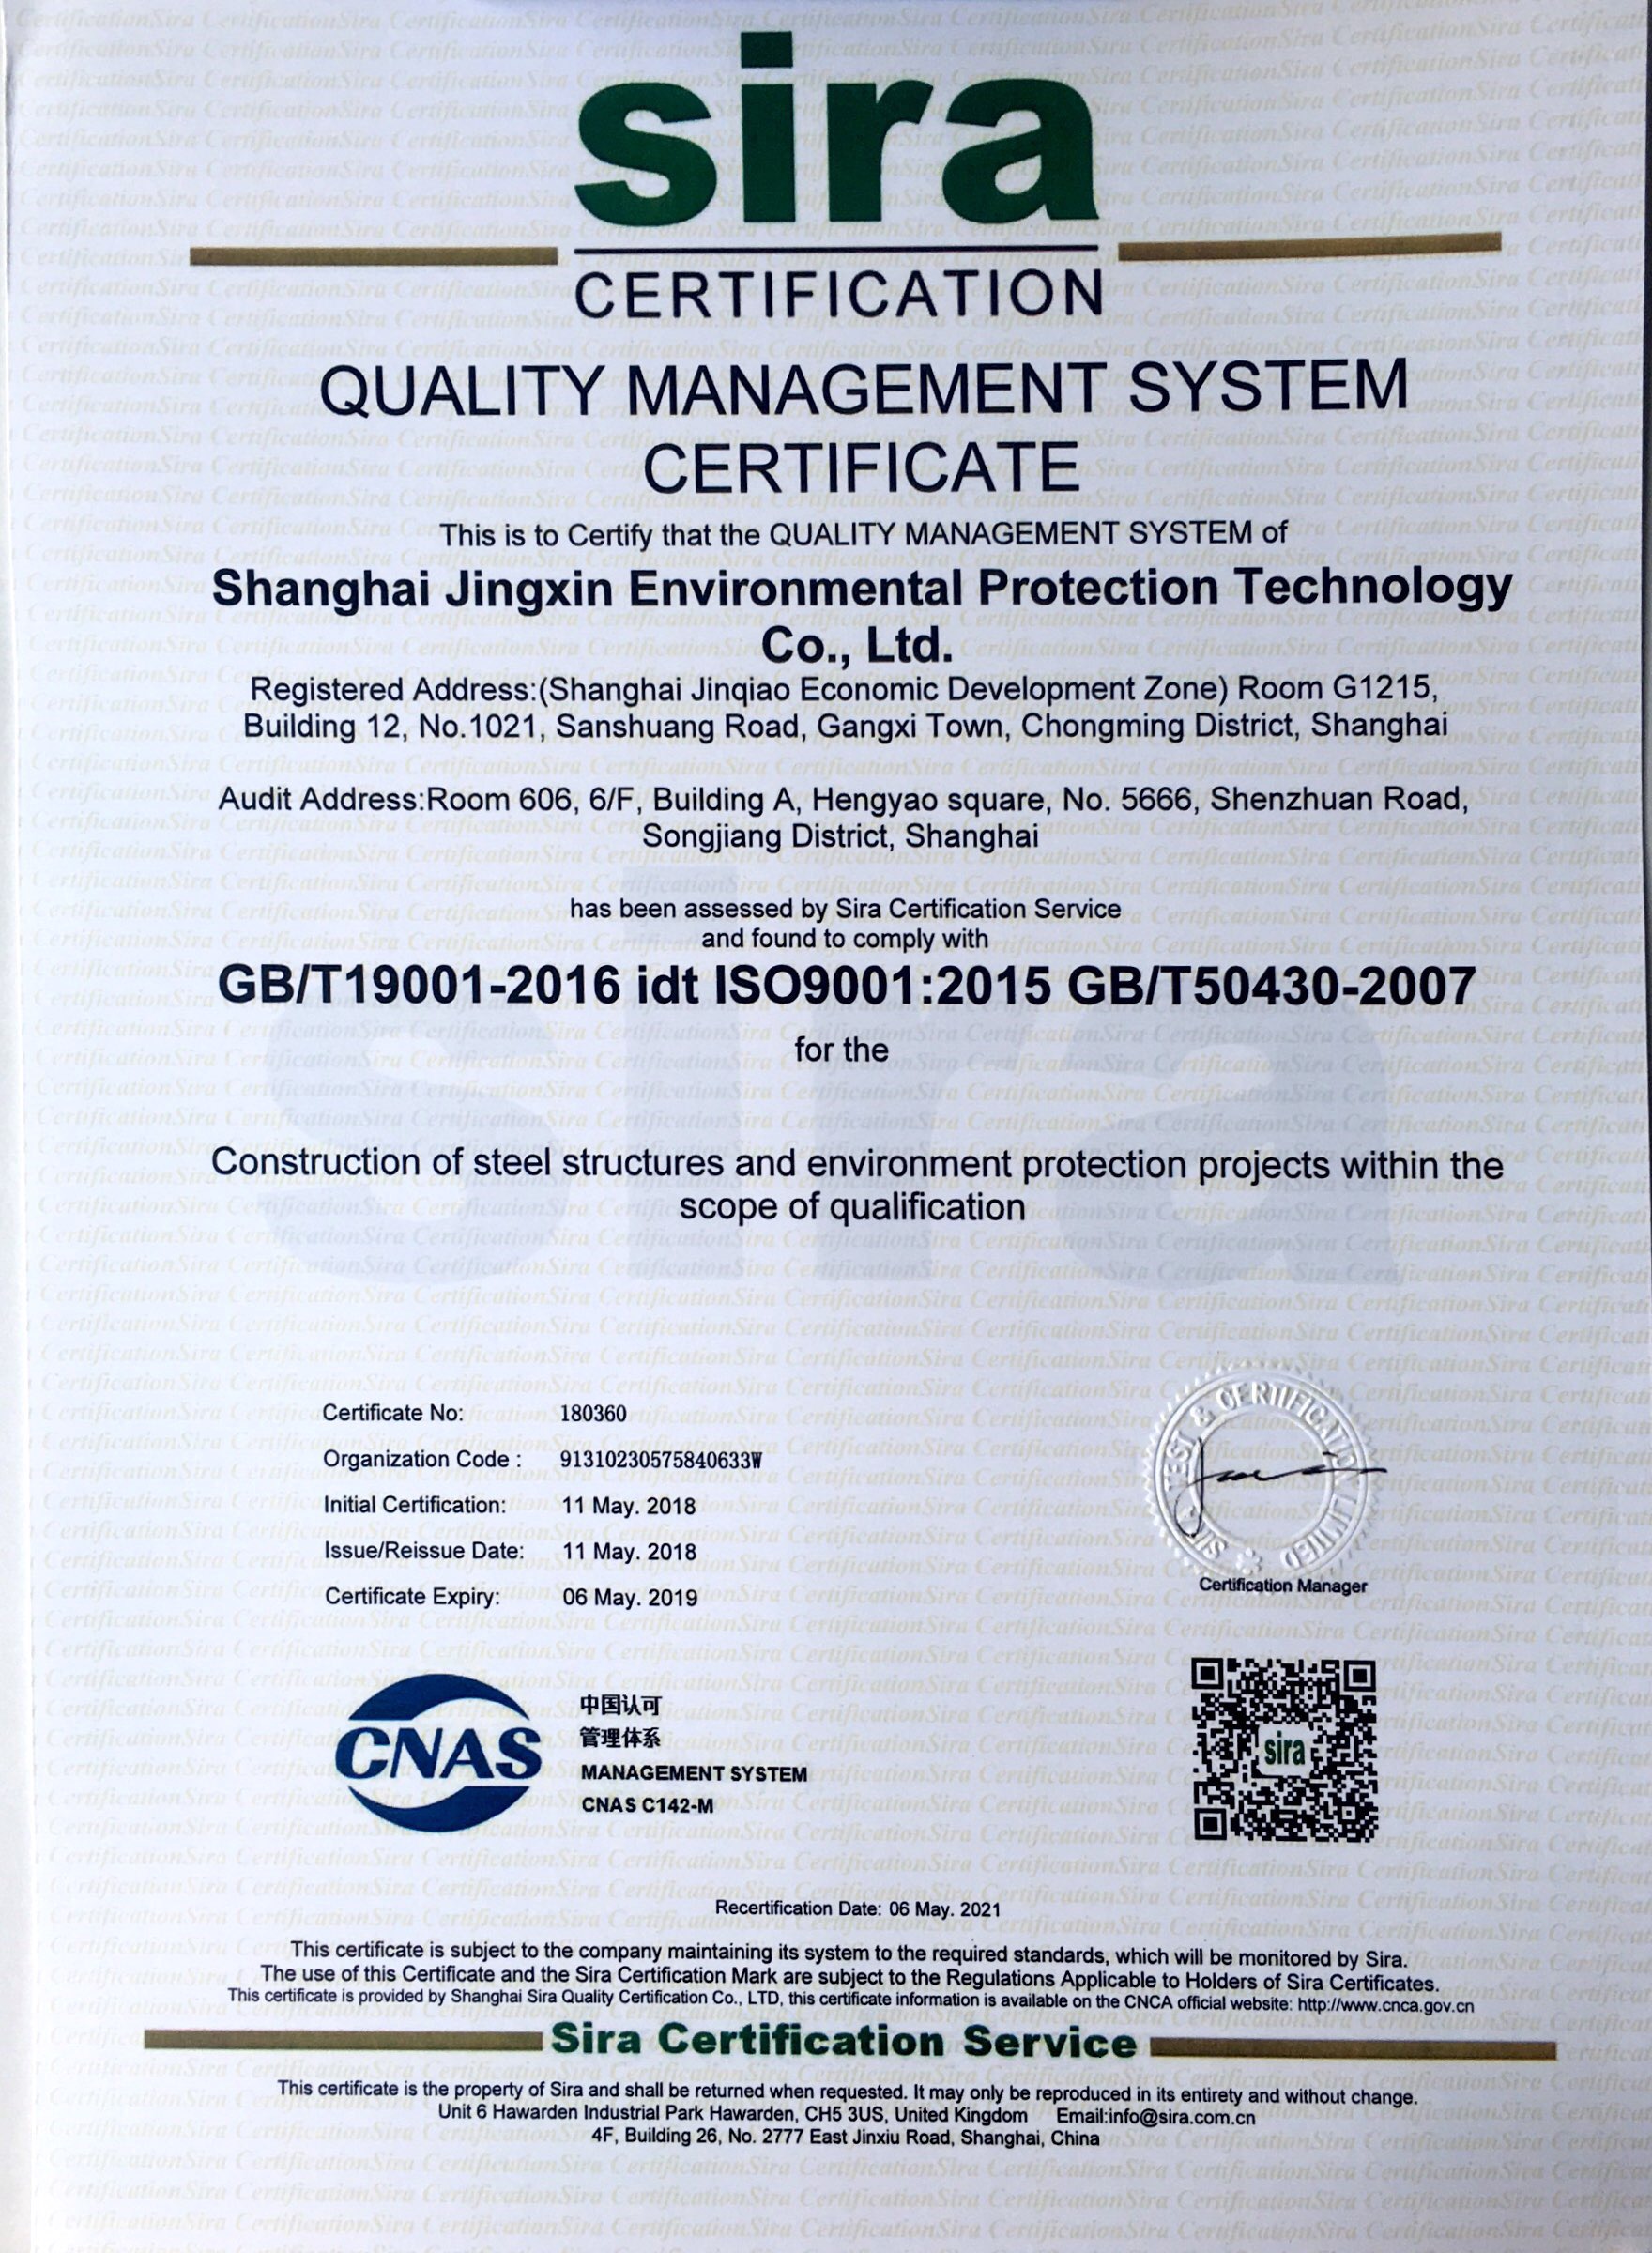 Jing Xin won the ISO9001 certification